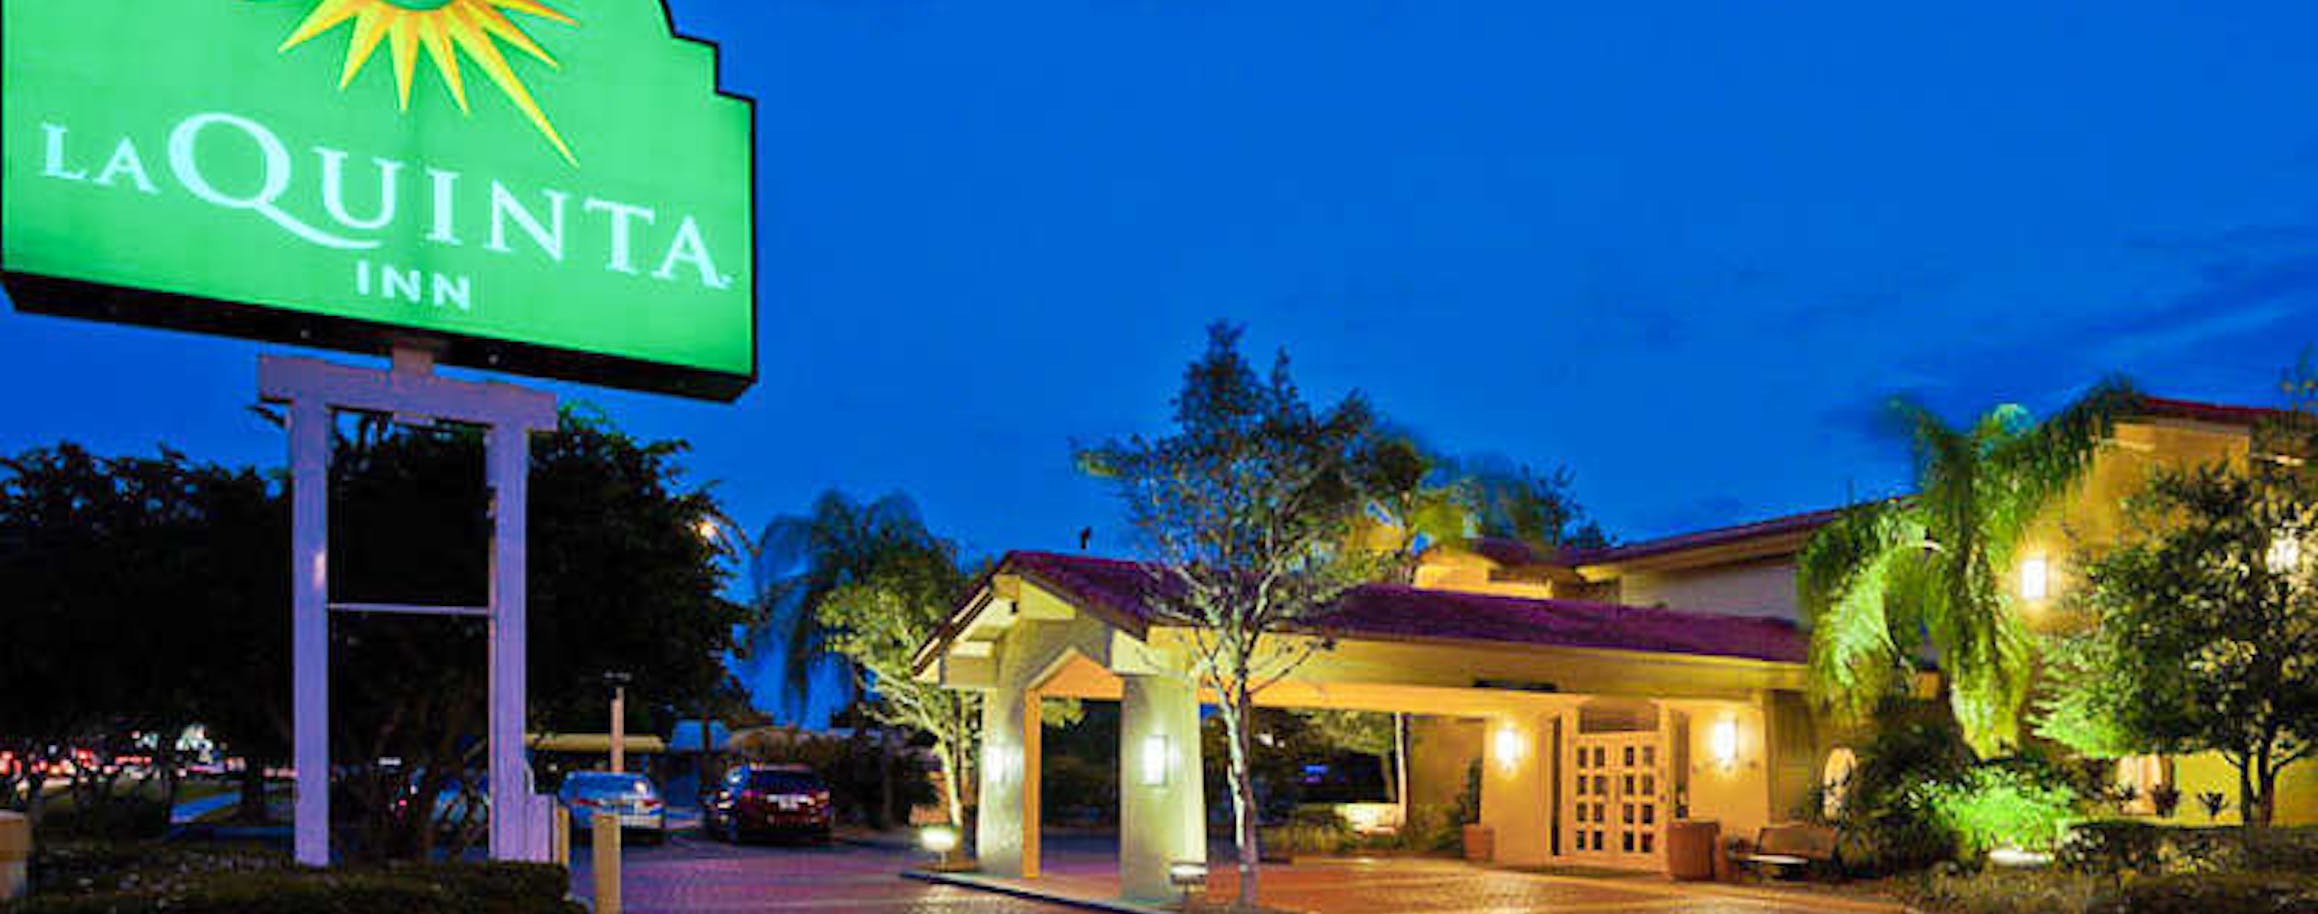 La Quinta Inn by Wyndham Tampa Bay Airport, Tampa - TPA - HotelTonight